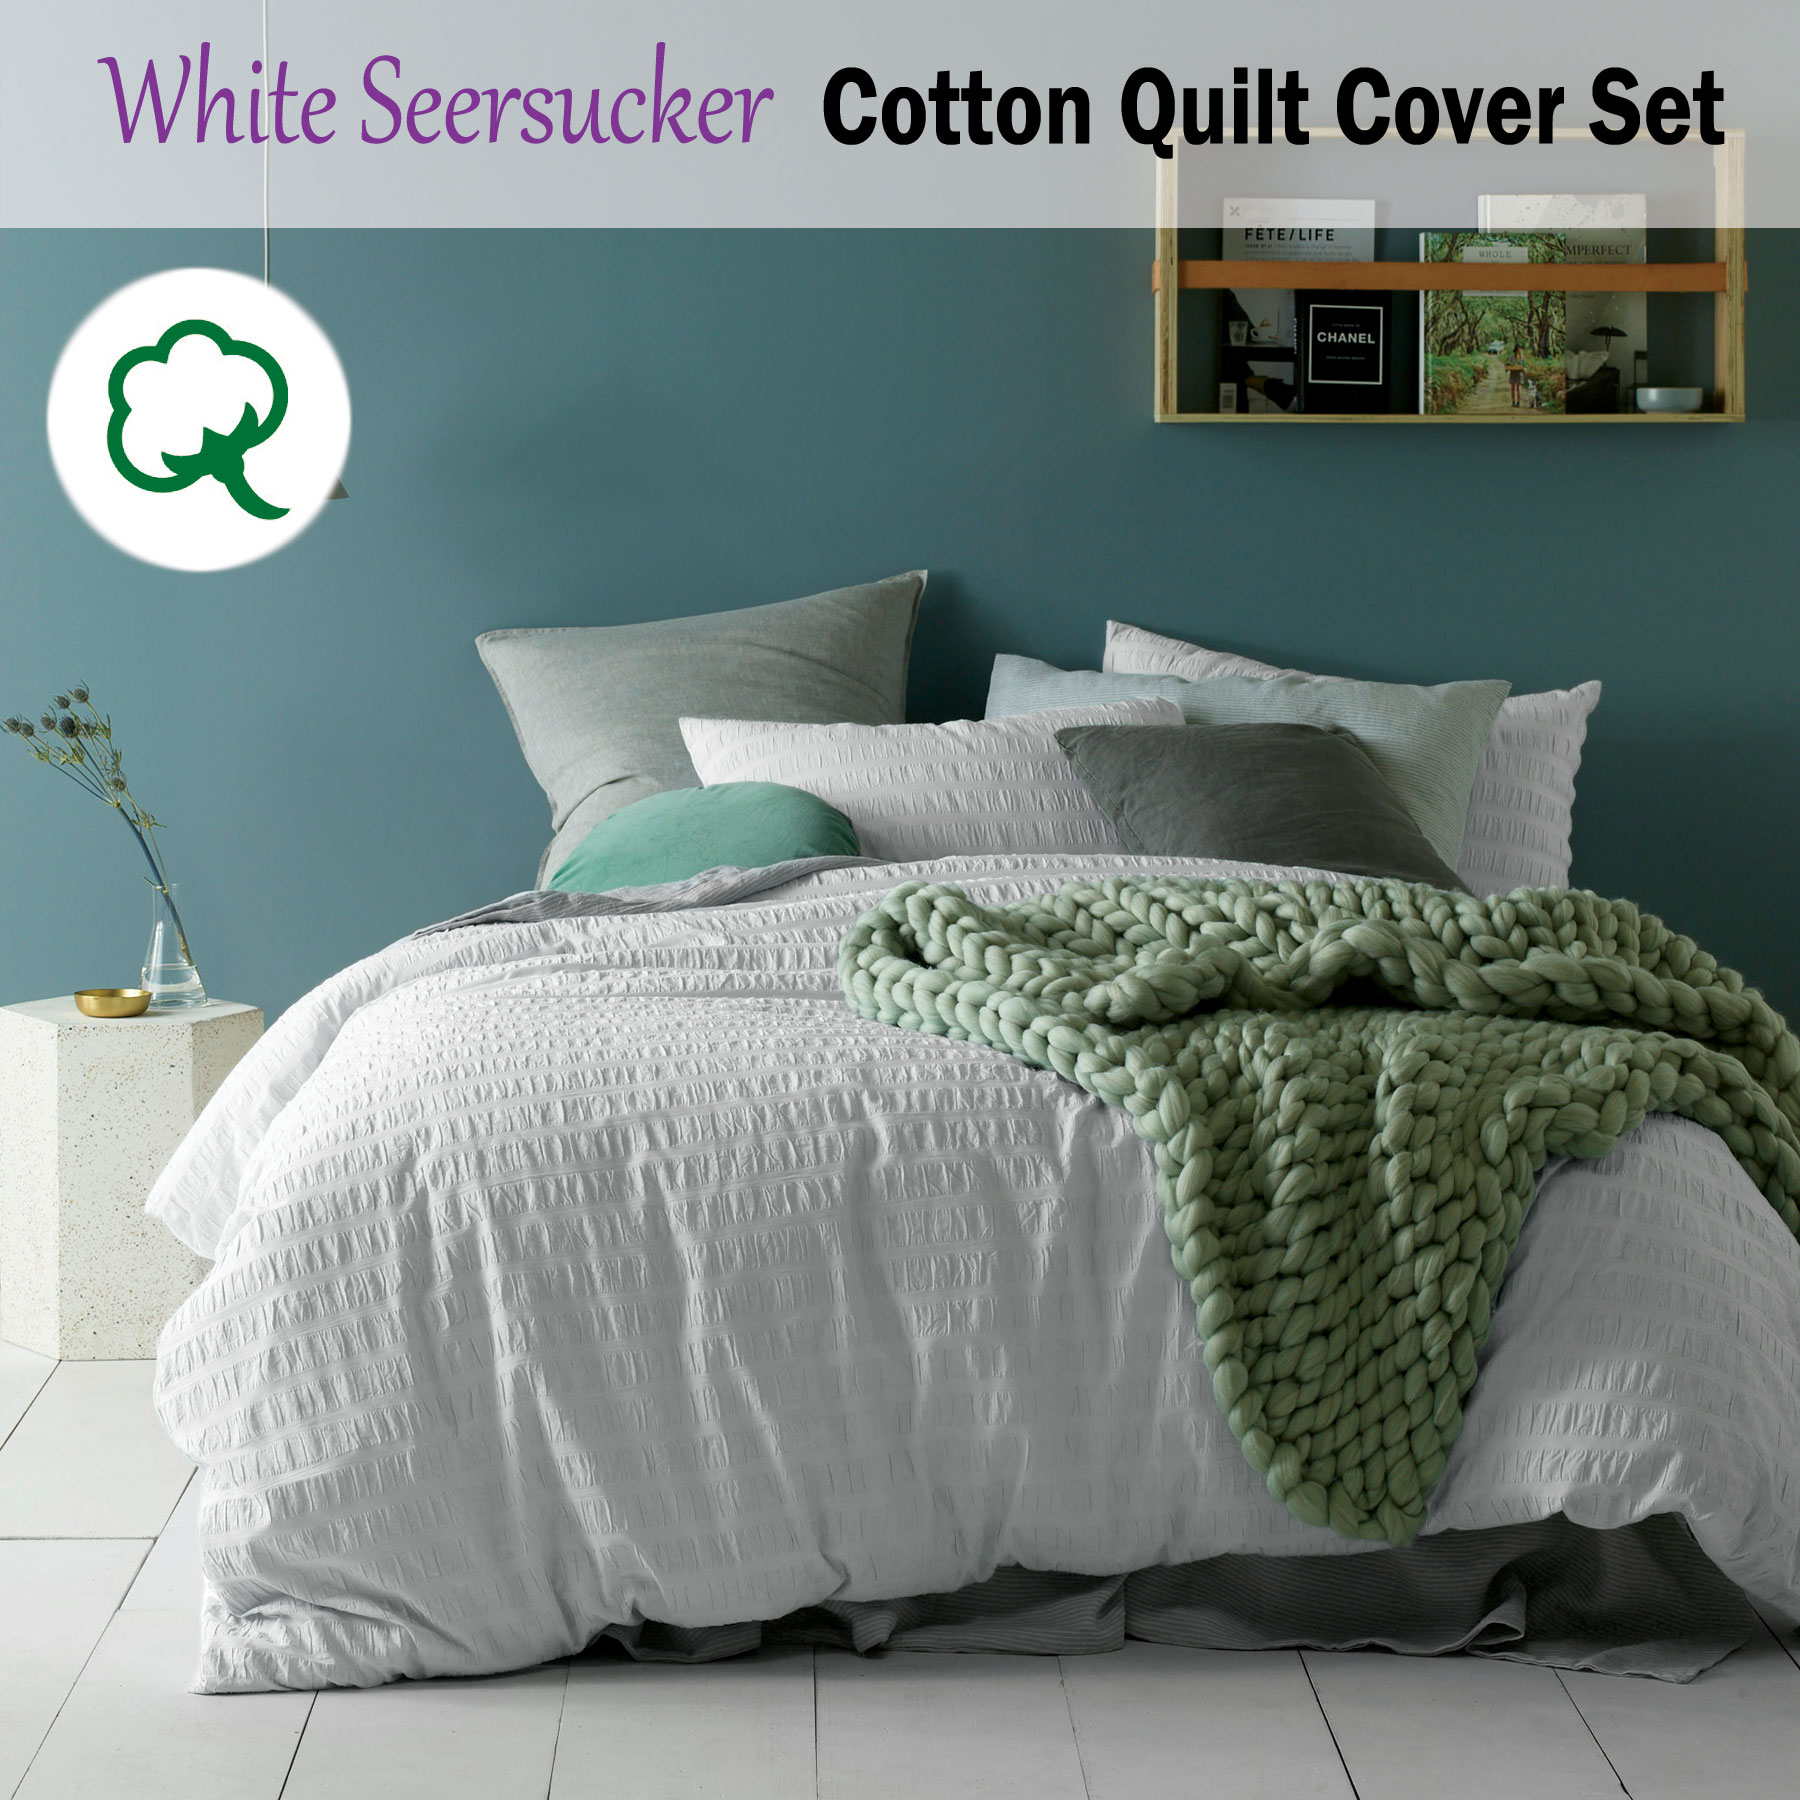 3 Pce White Seersucker 100 Cotton Quilt Cover Set By Accessorize